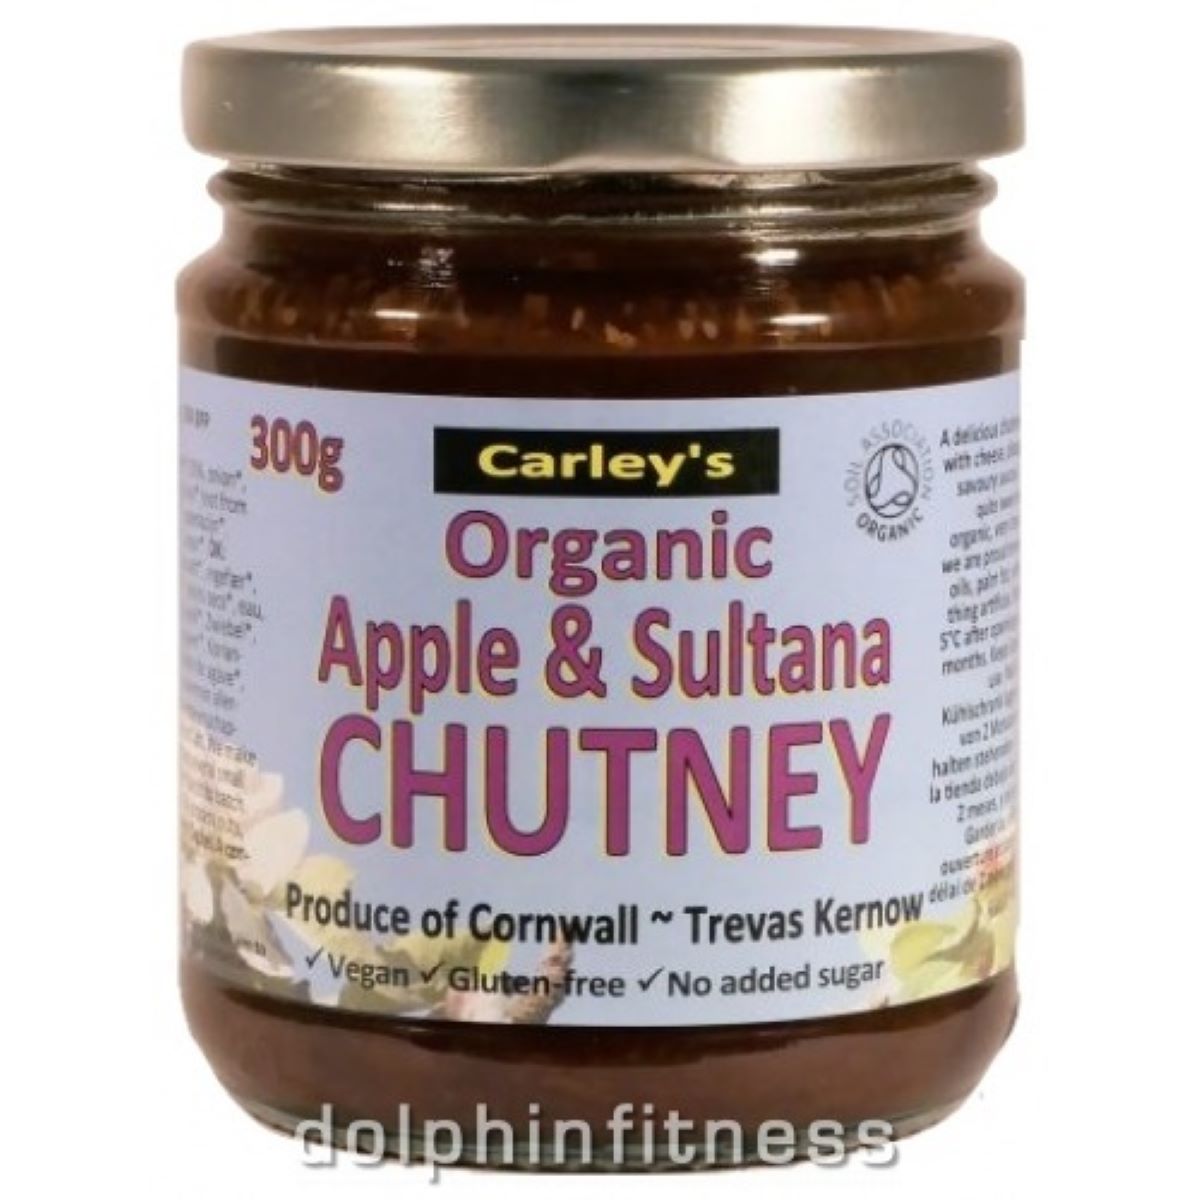 Carley's Organic Apple & Sultana Chutney 300g,